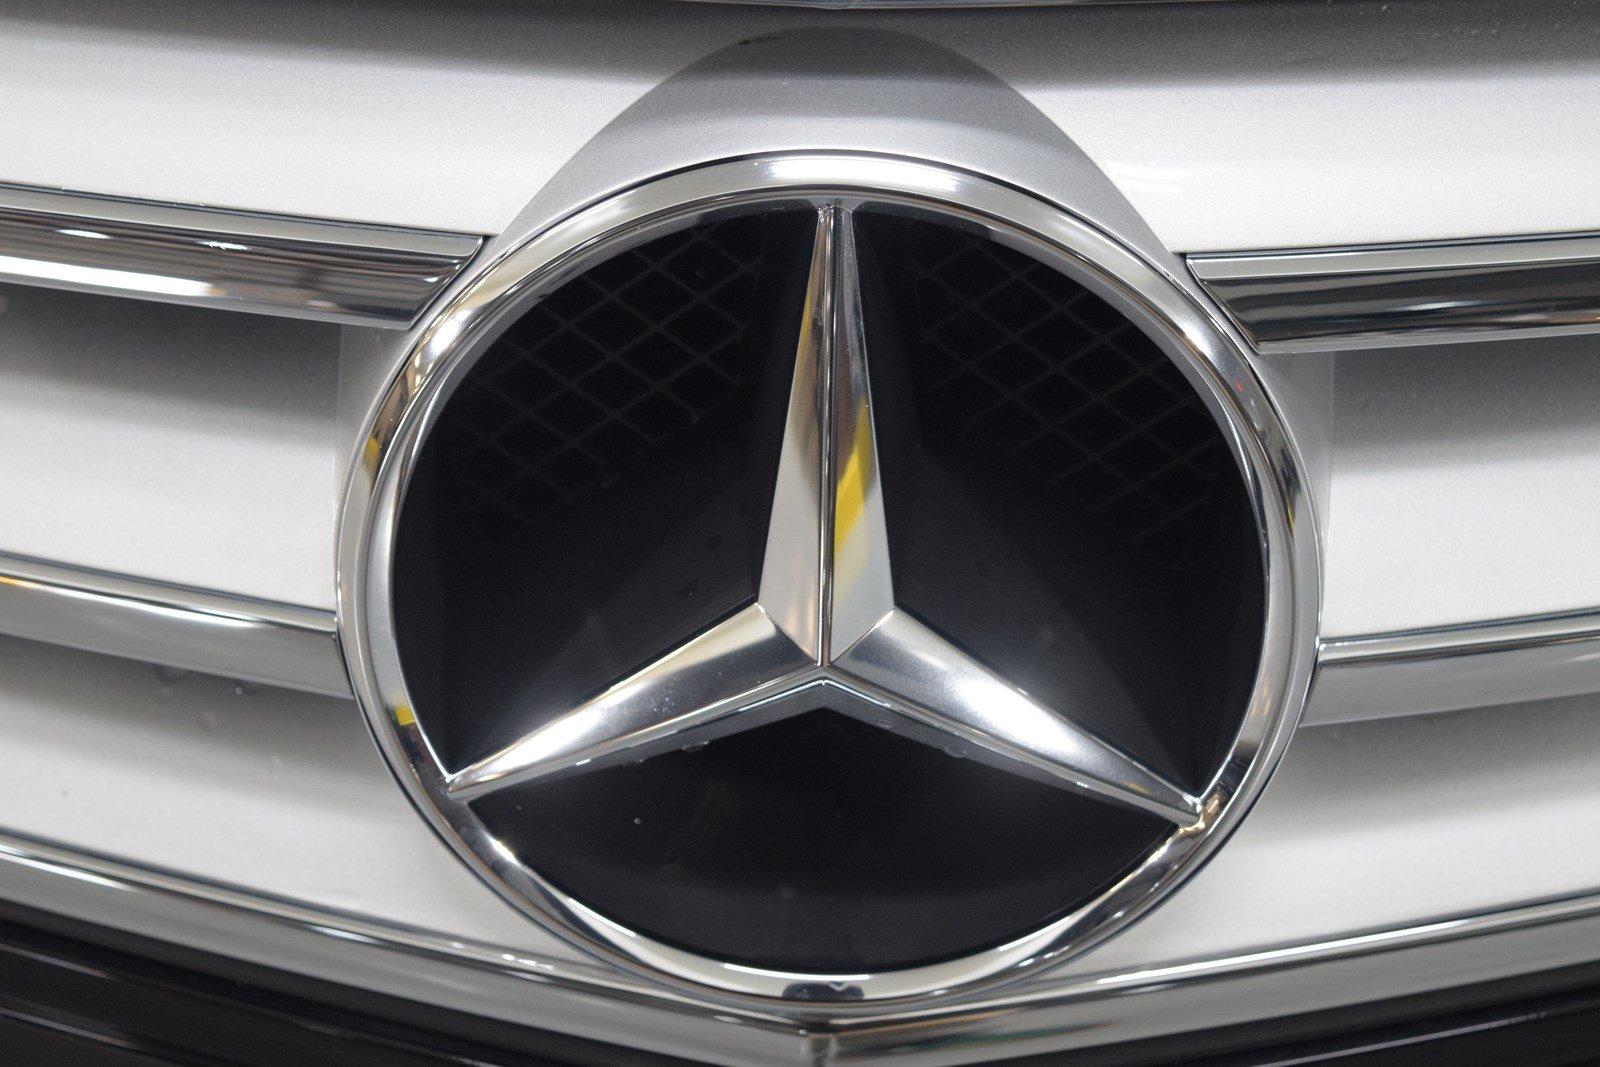 Used 2011 Mercedes-Benz C-Class C300 Luxury for sale Sold at Gravity Autos Marietta in Marietta GA 30060 9